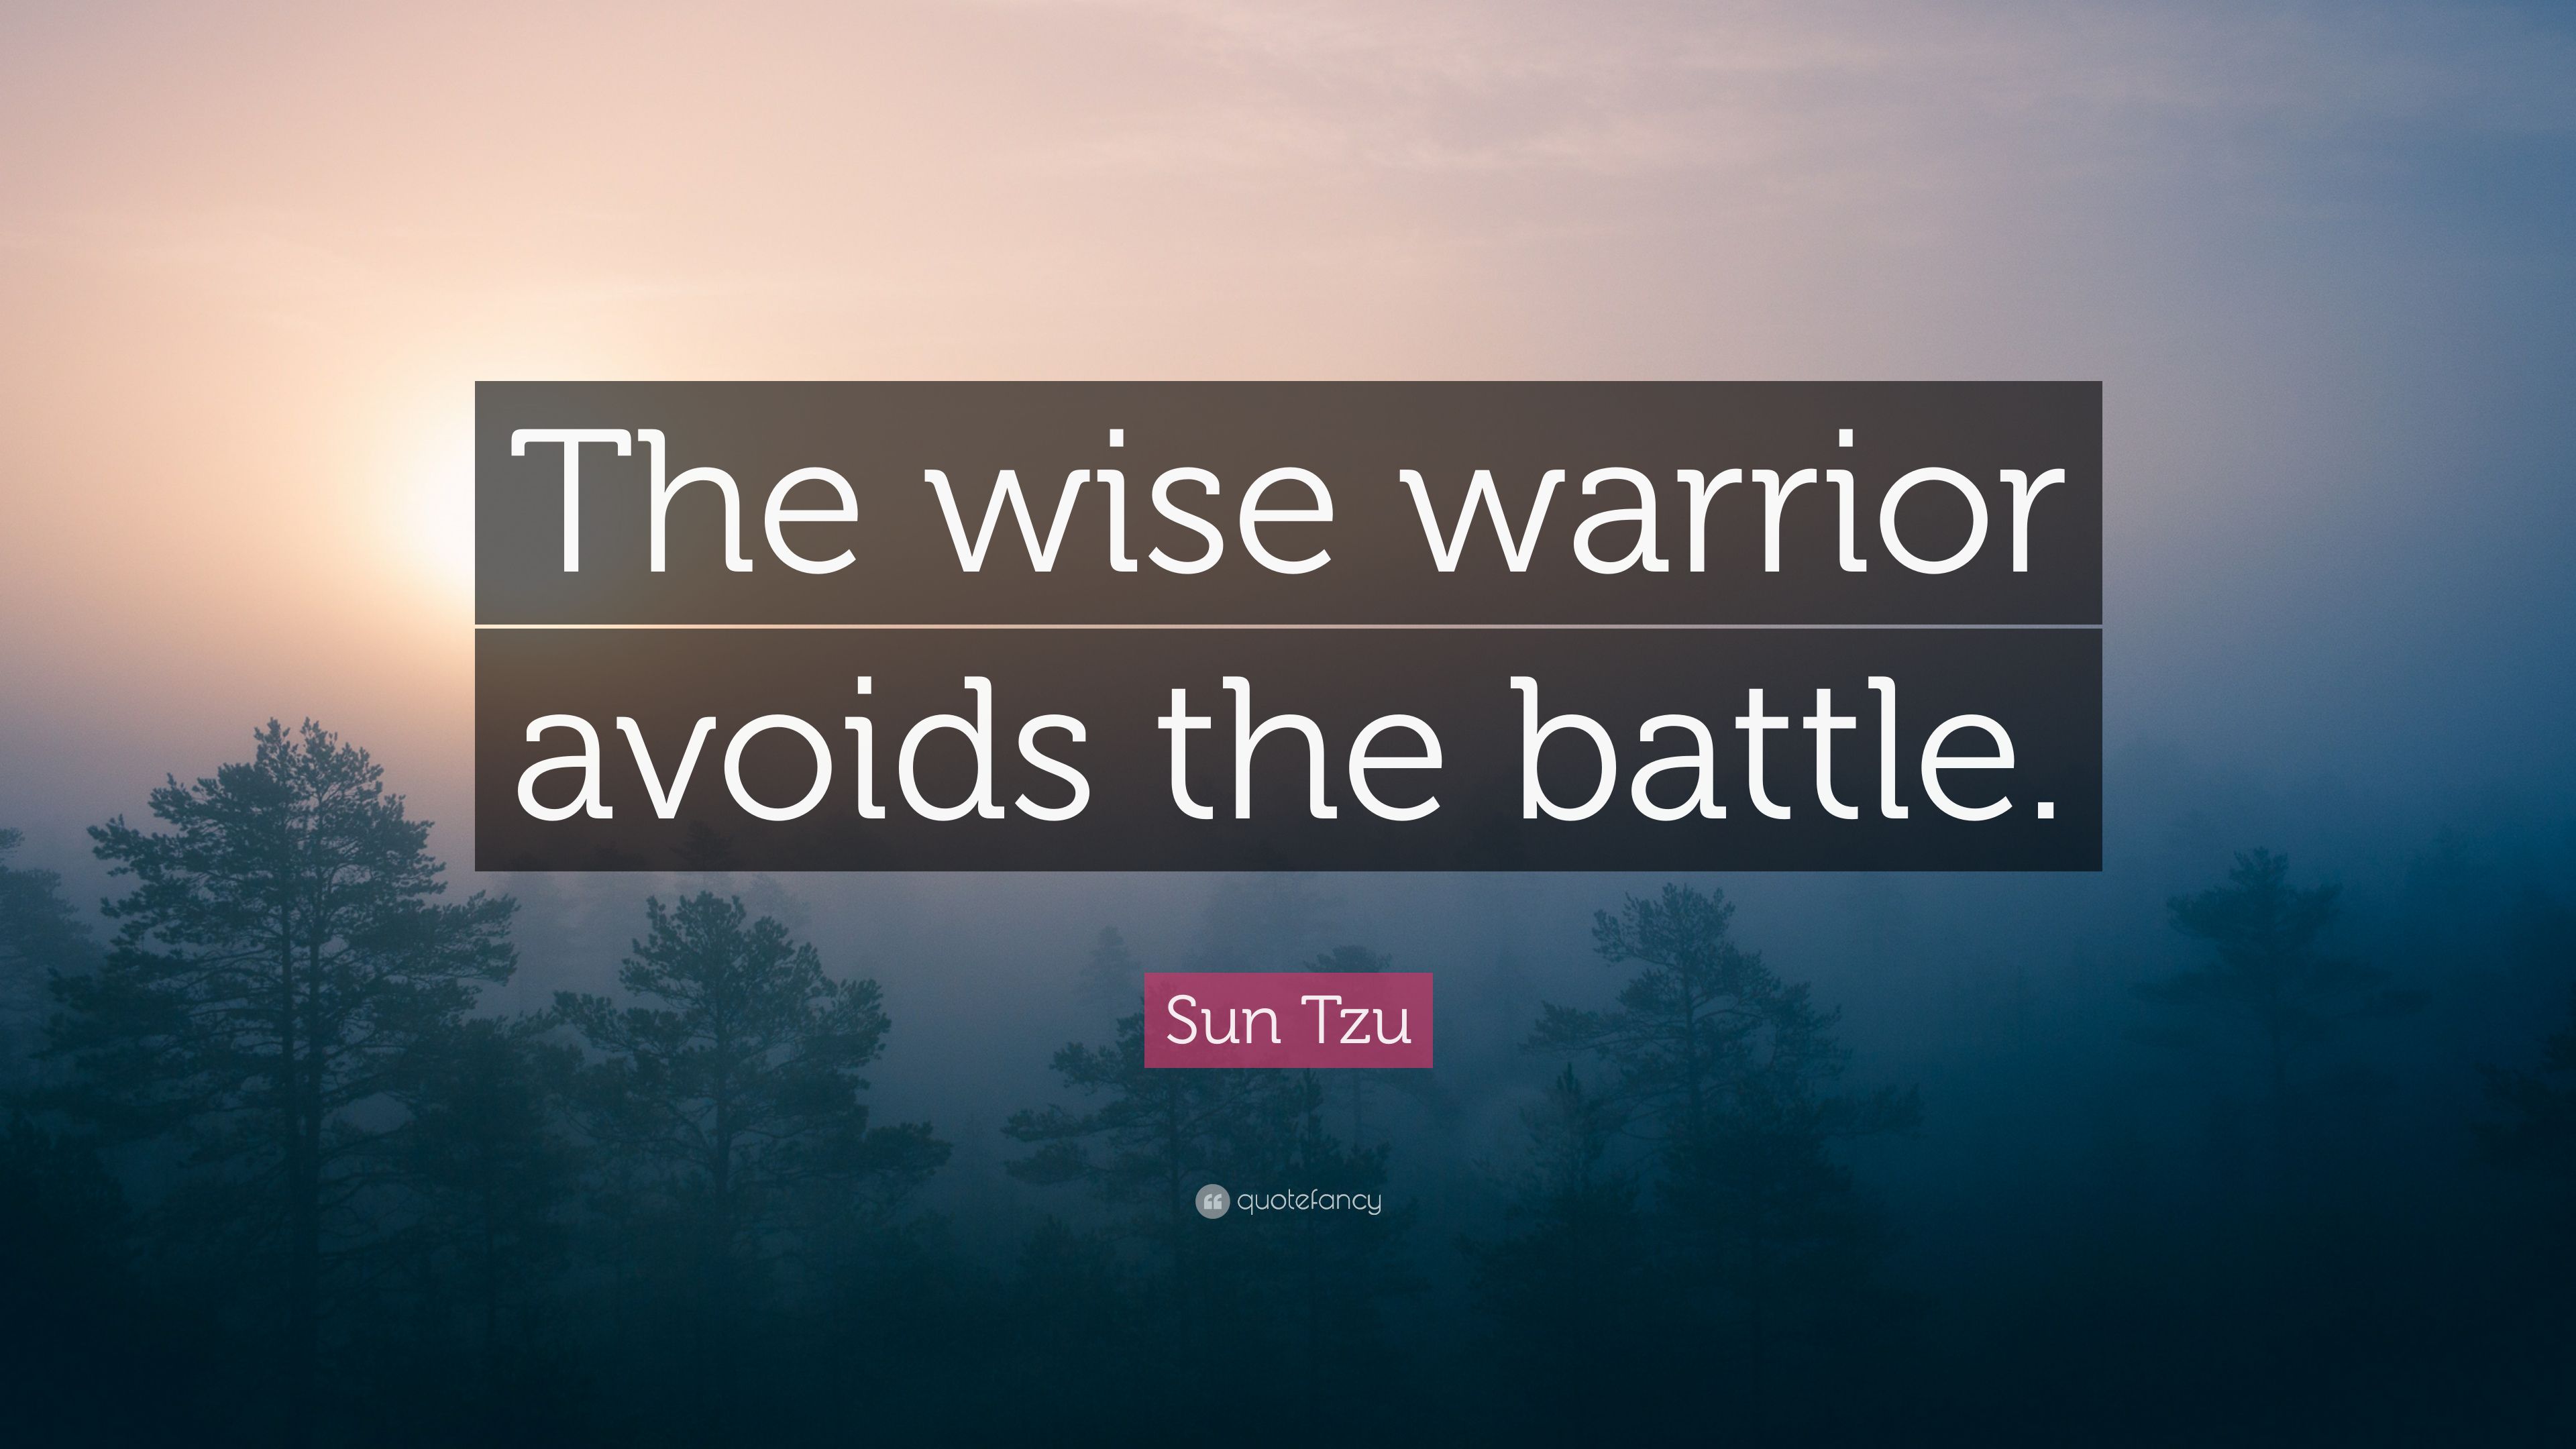 Sun Tzu Quote: "The wise warrior avoids the battle. 